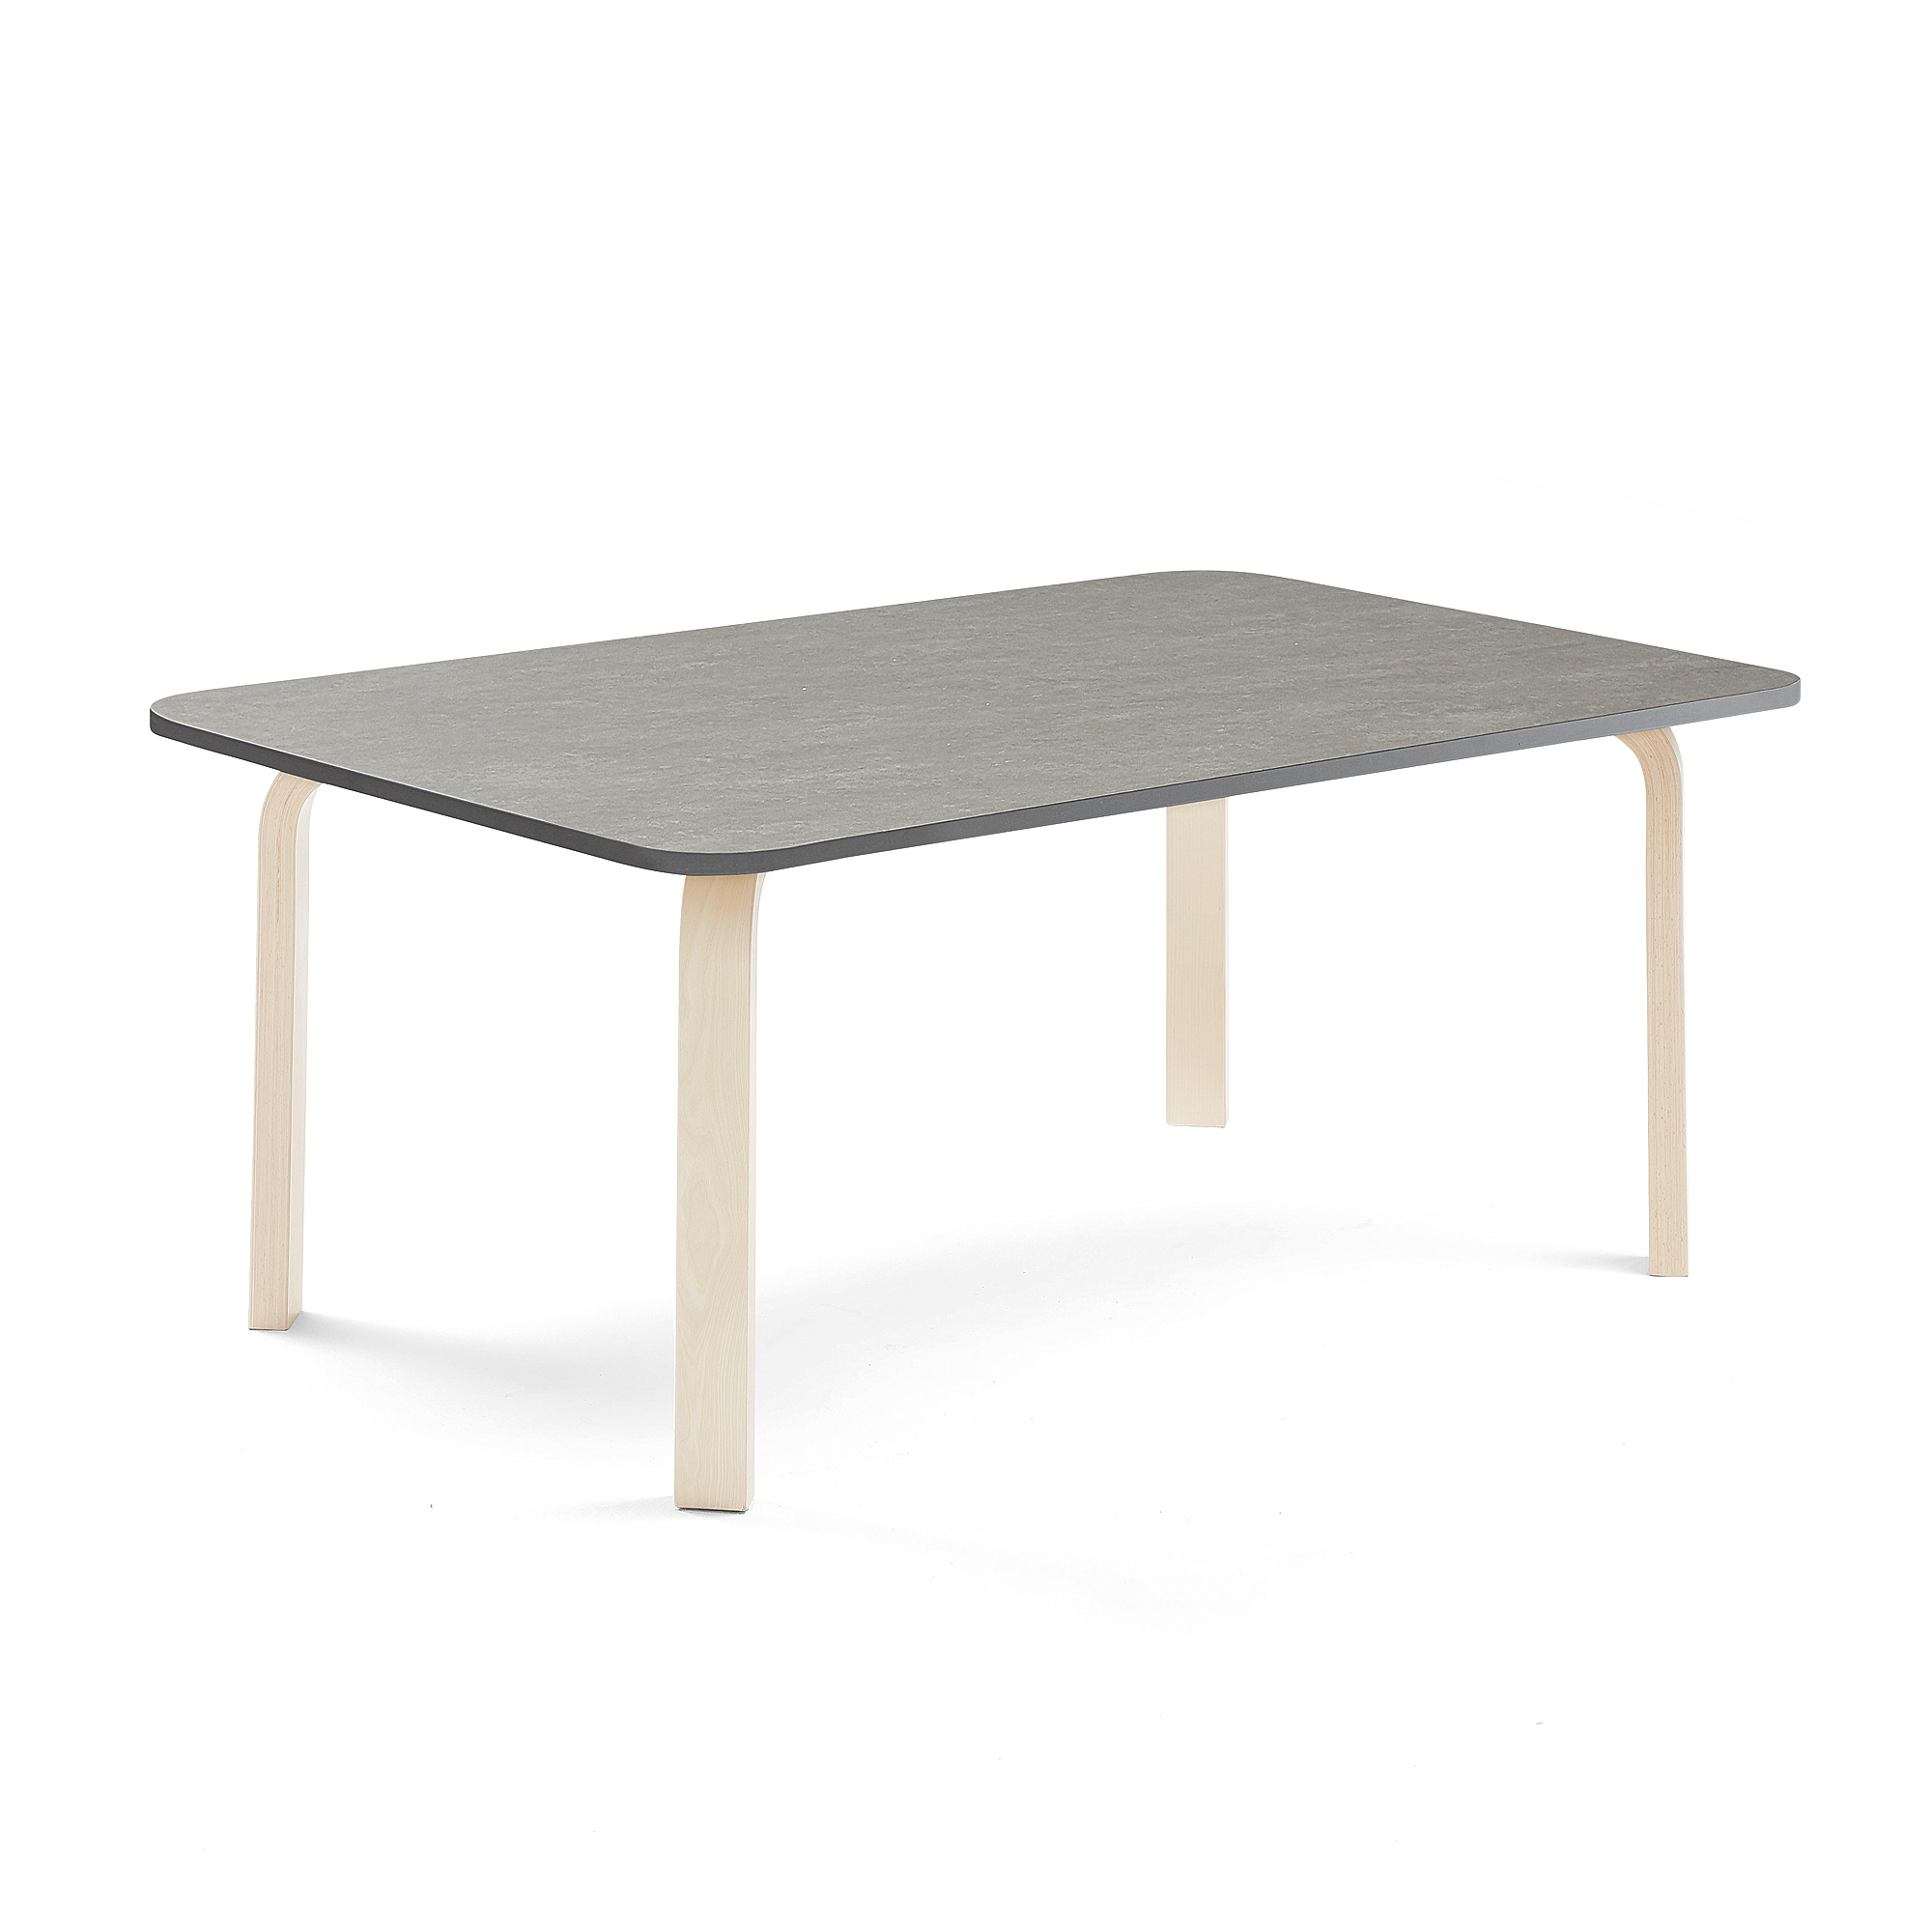 Stůl ELTON, 1400x800x530 mm, bříza, akustické linoleum, tmavě šedá